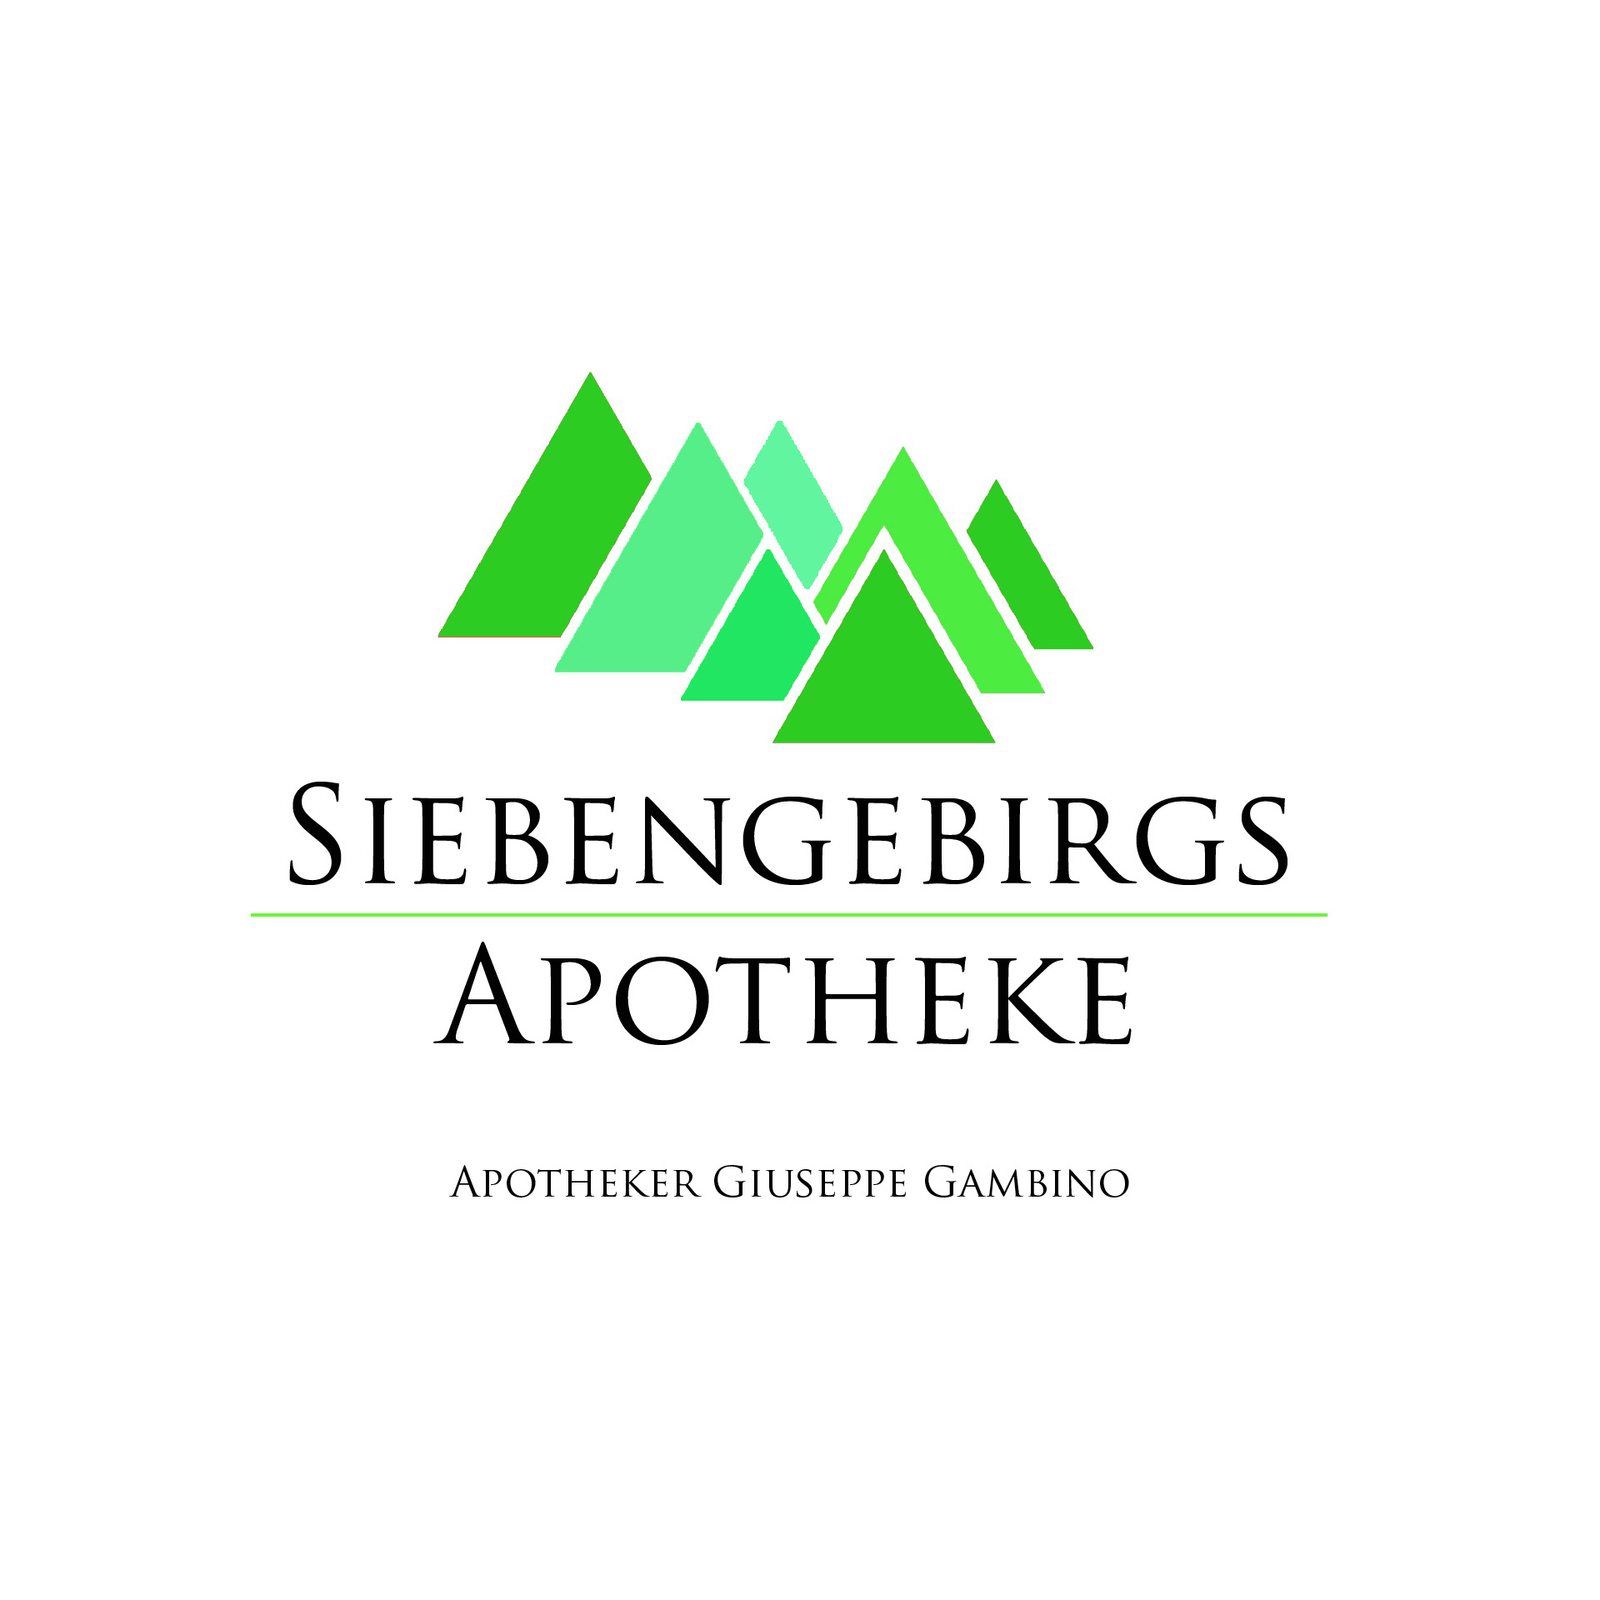 Siebengebirgs-Apotheke in Köln - Logo